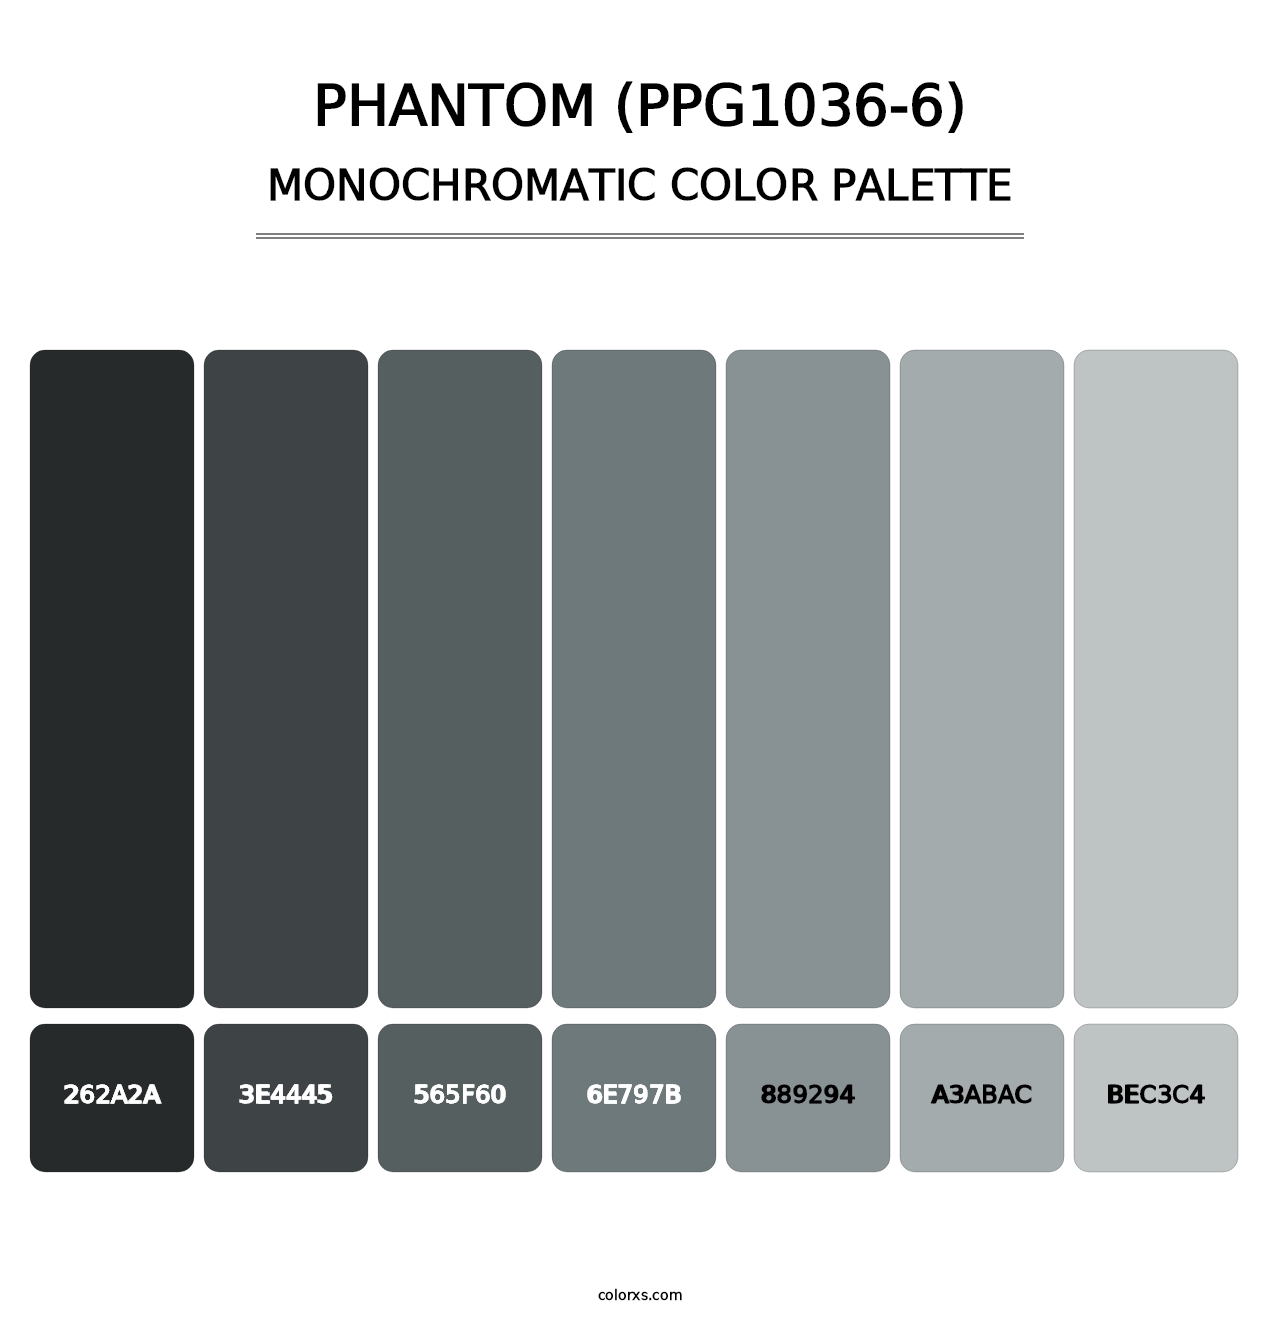 Phantom (PPG1036-6) - Monochromatic Color Palette